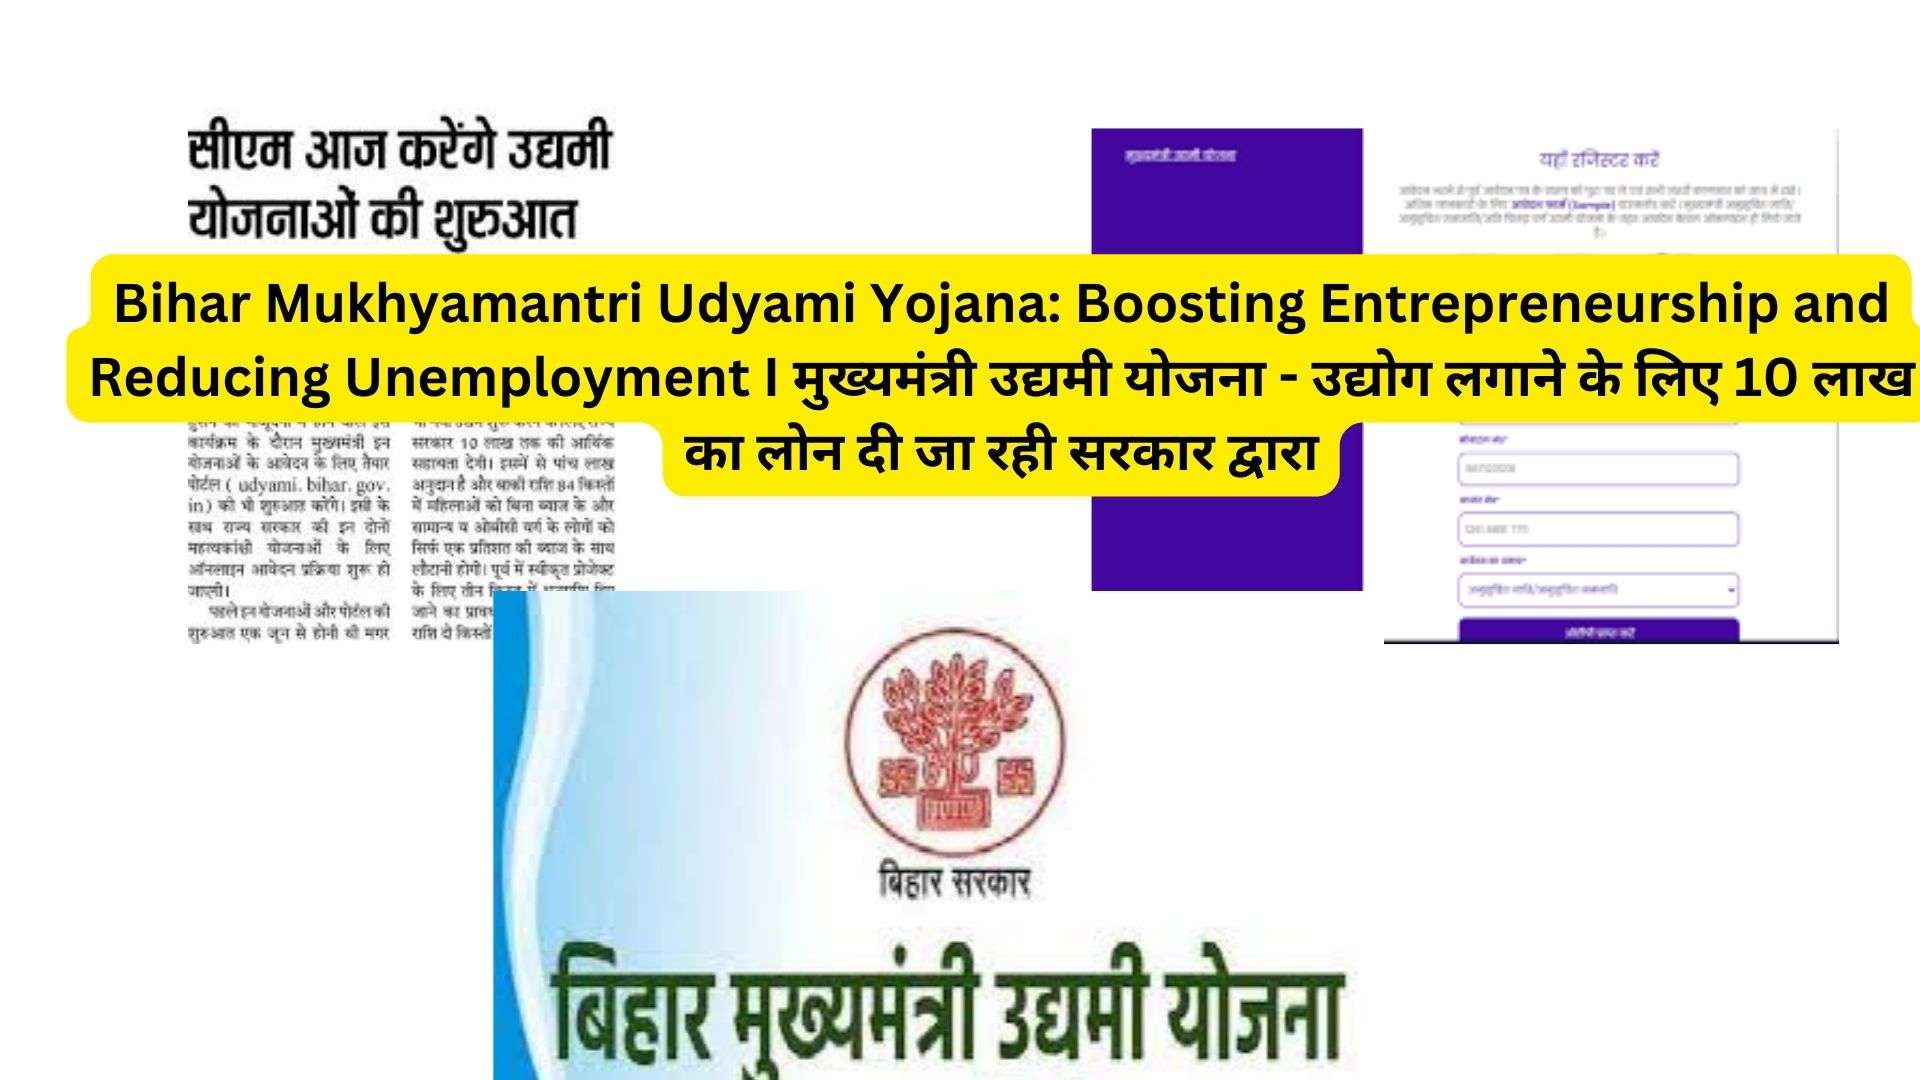 Bihar Mukhyamantri Udyami Yojana: Boosting Entrepreneurship and Reducing Unemployment I मुख्यमंत्री उद्यमी योजना - उद्योग लगाने के लिए 10 लाख का लोन दी जा रही सरकार द्वारा